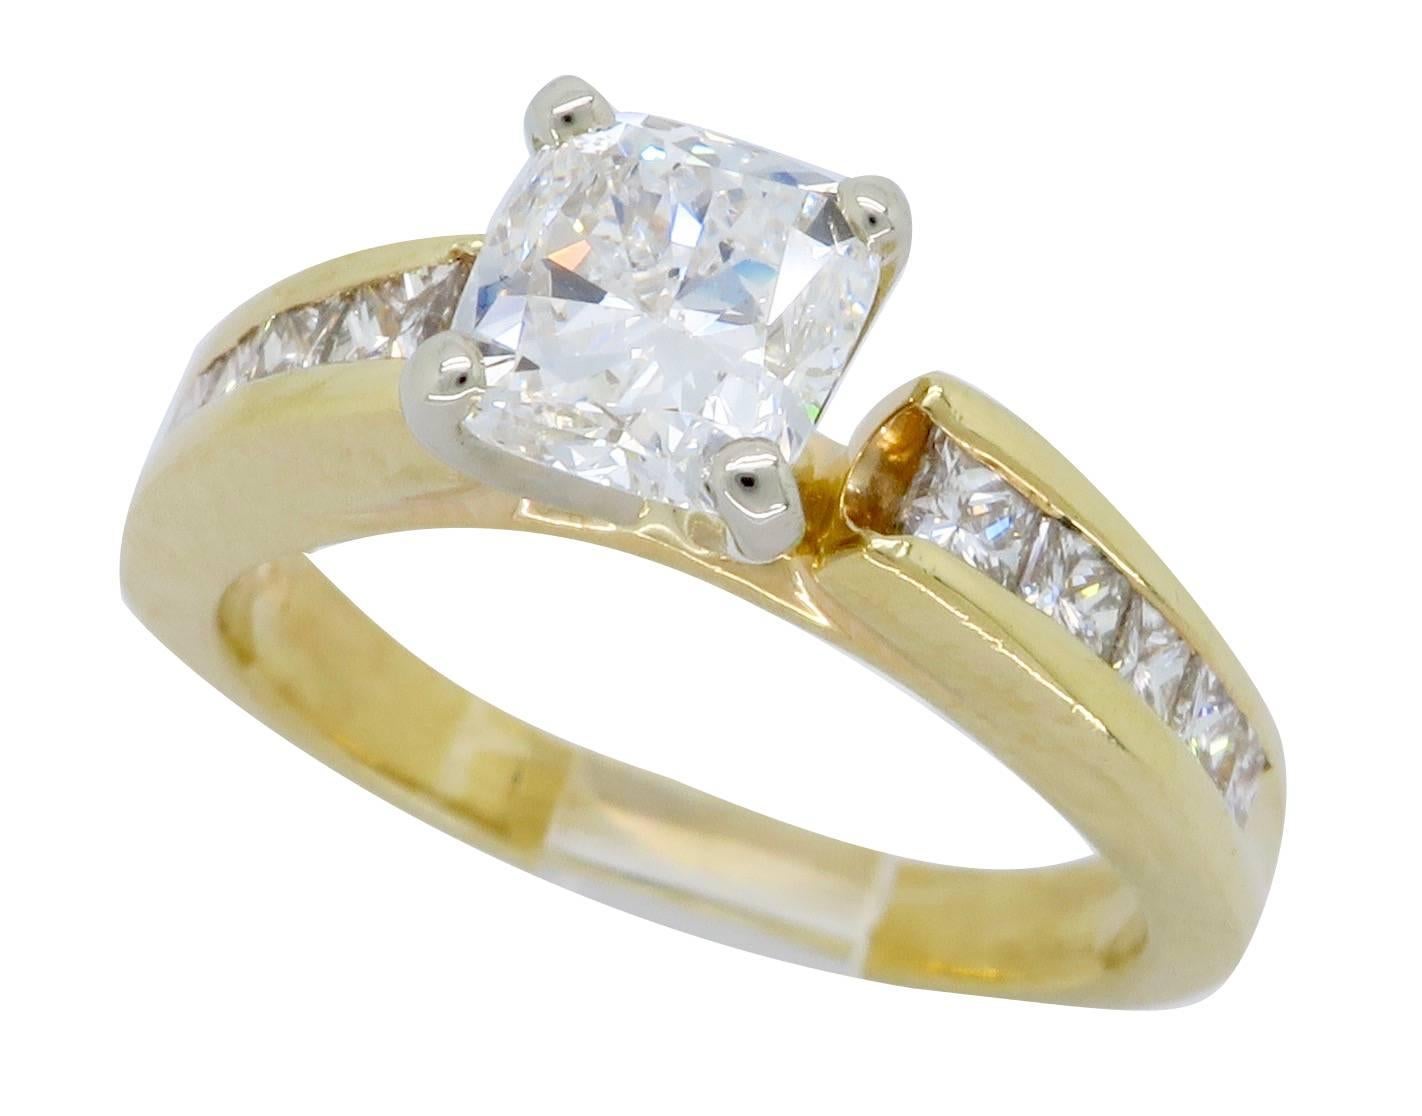 Certified Cushion Cut Diamond Engagement Ring 5